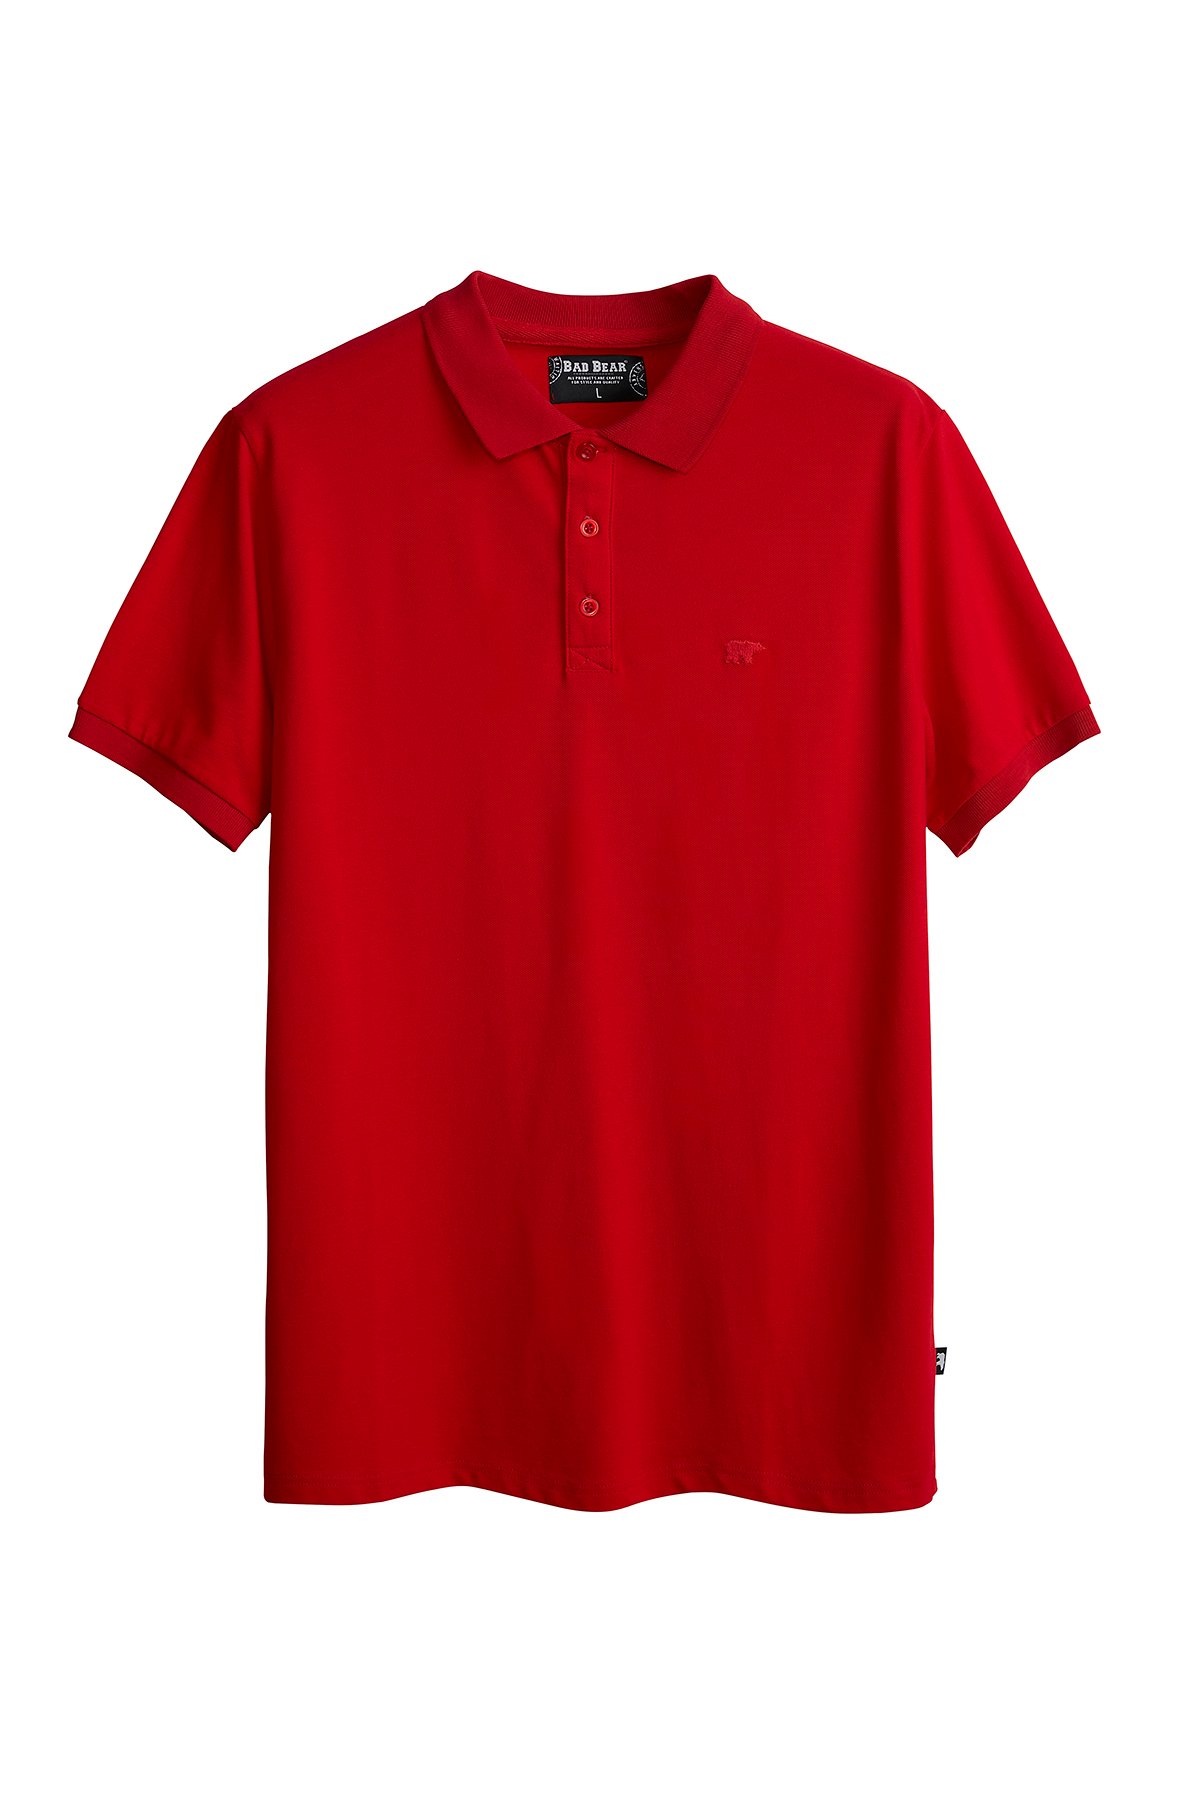 Stark Crimson Red Kırmızı Polo Yaka Erkek T-Shirt |BAD BEAR